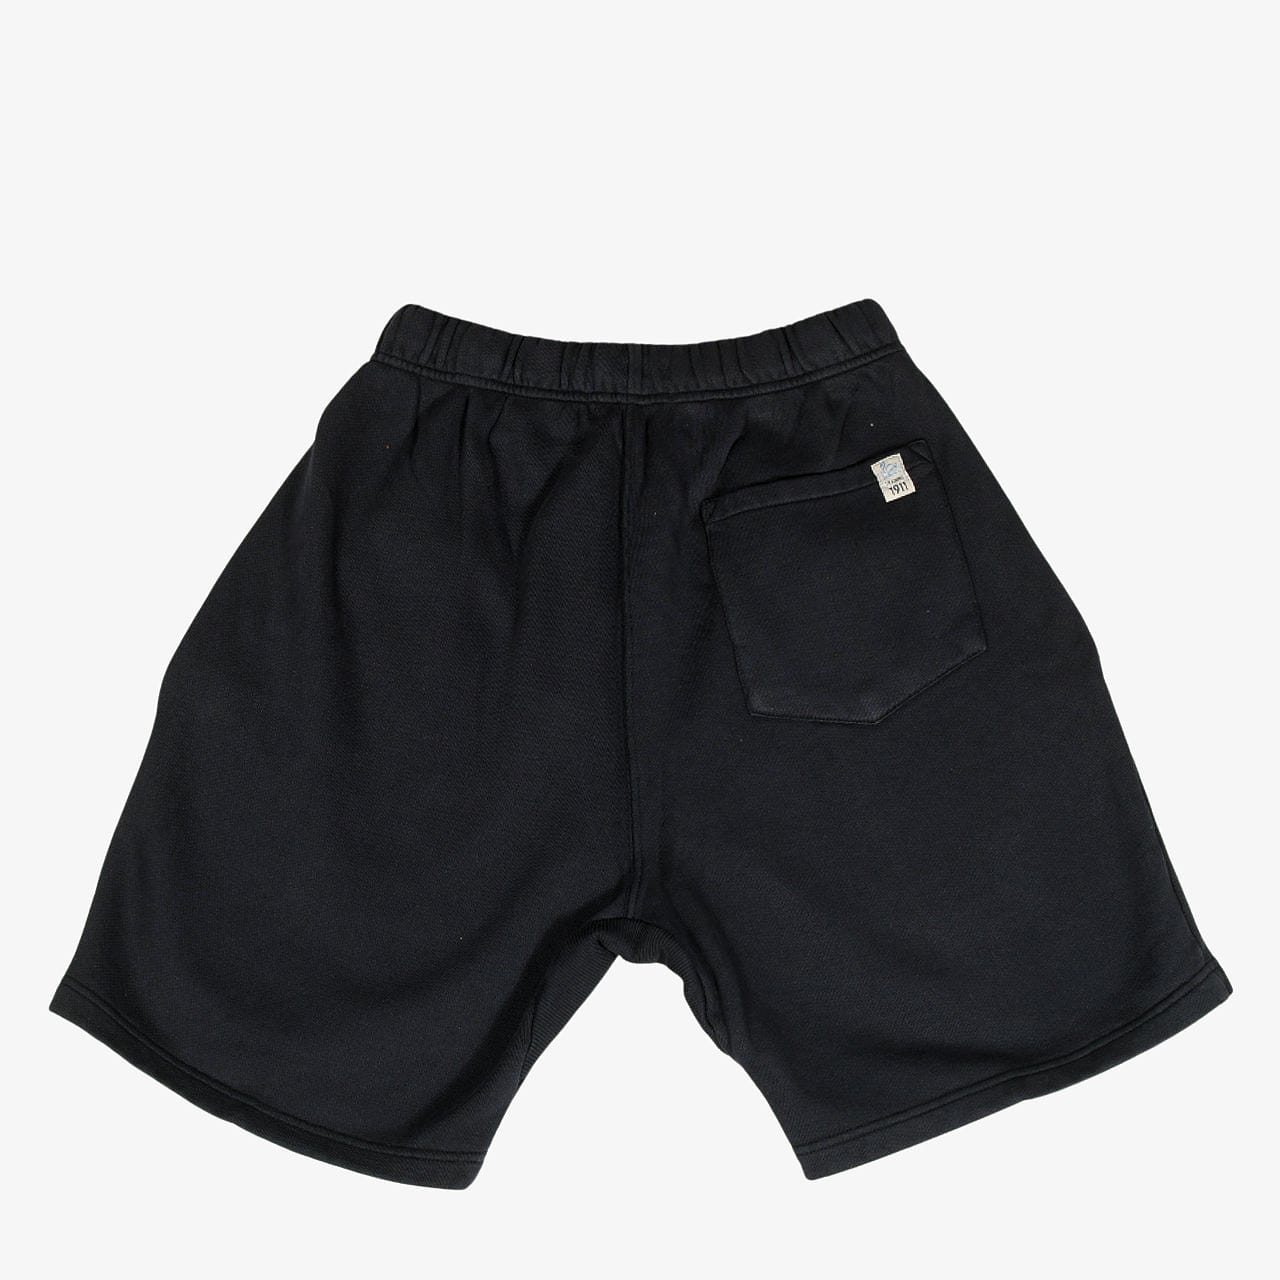 Good Basics Men's Sweat Shorts